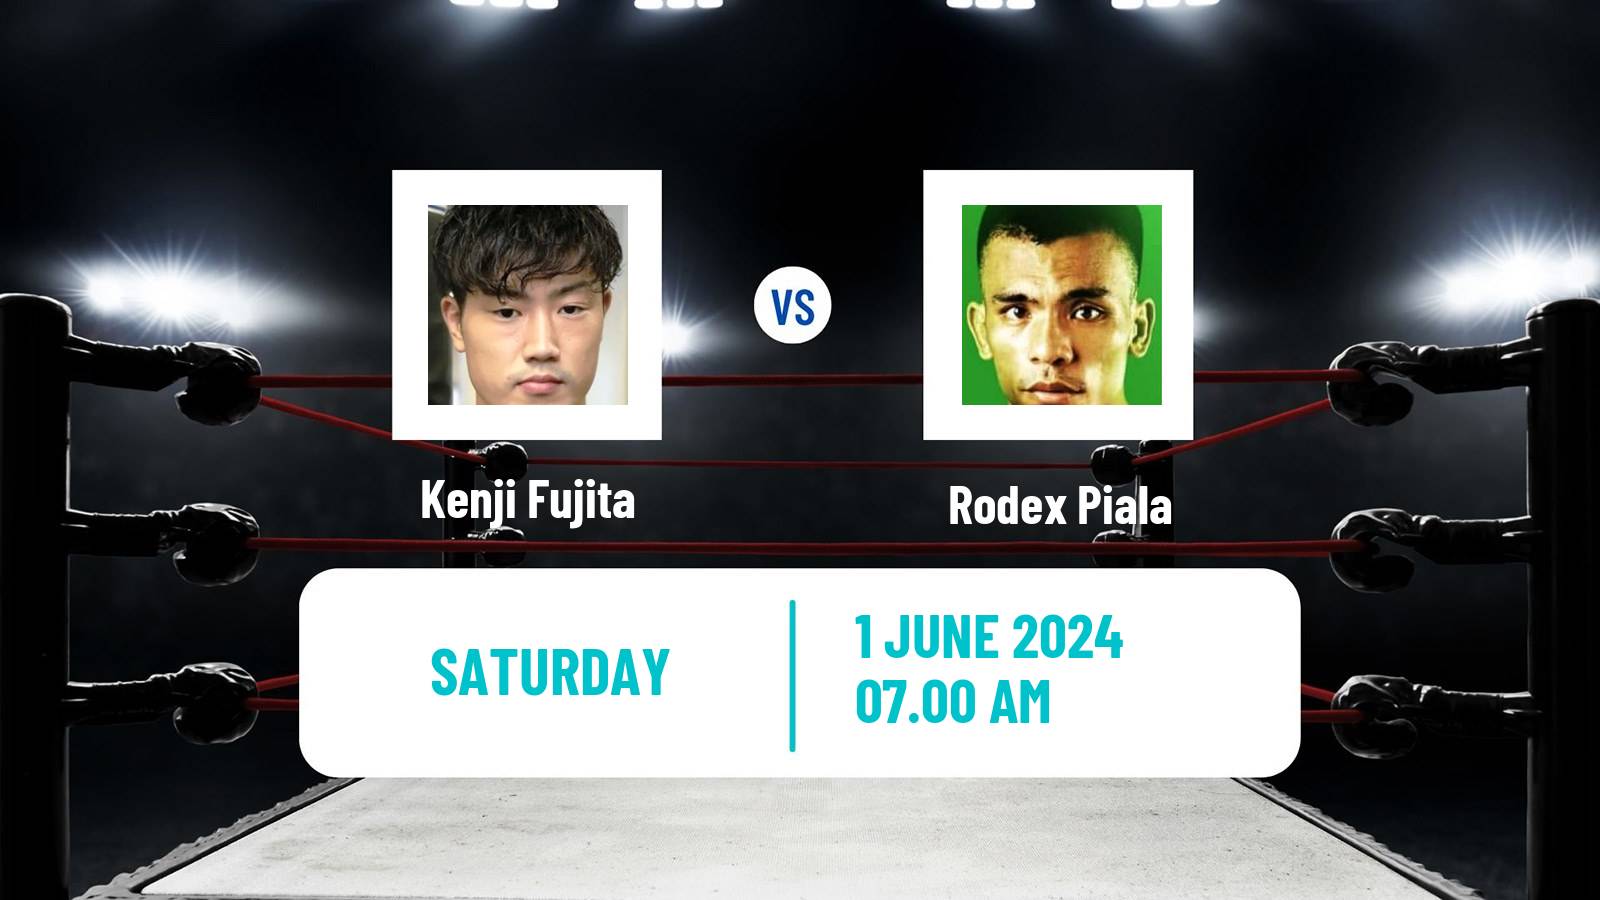 Boxing Featherweight Opbf Title Men Kenji Fujita - Rodex Piala